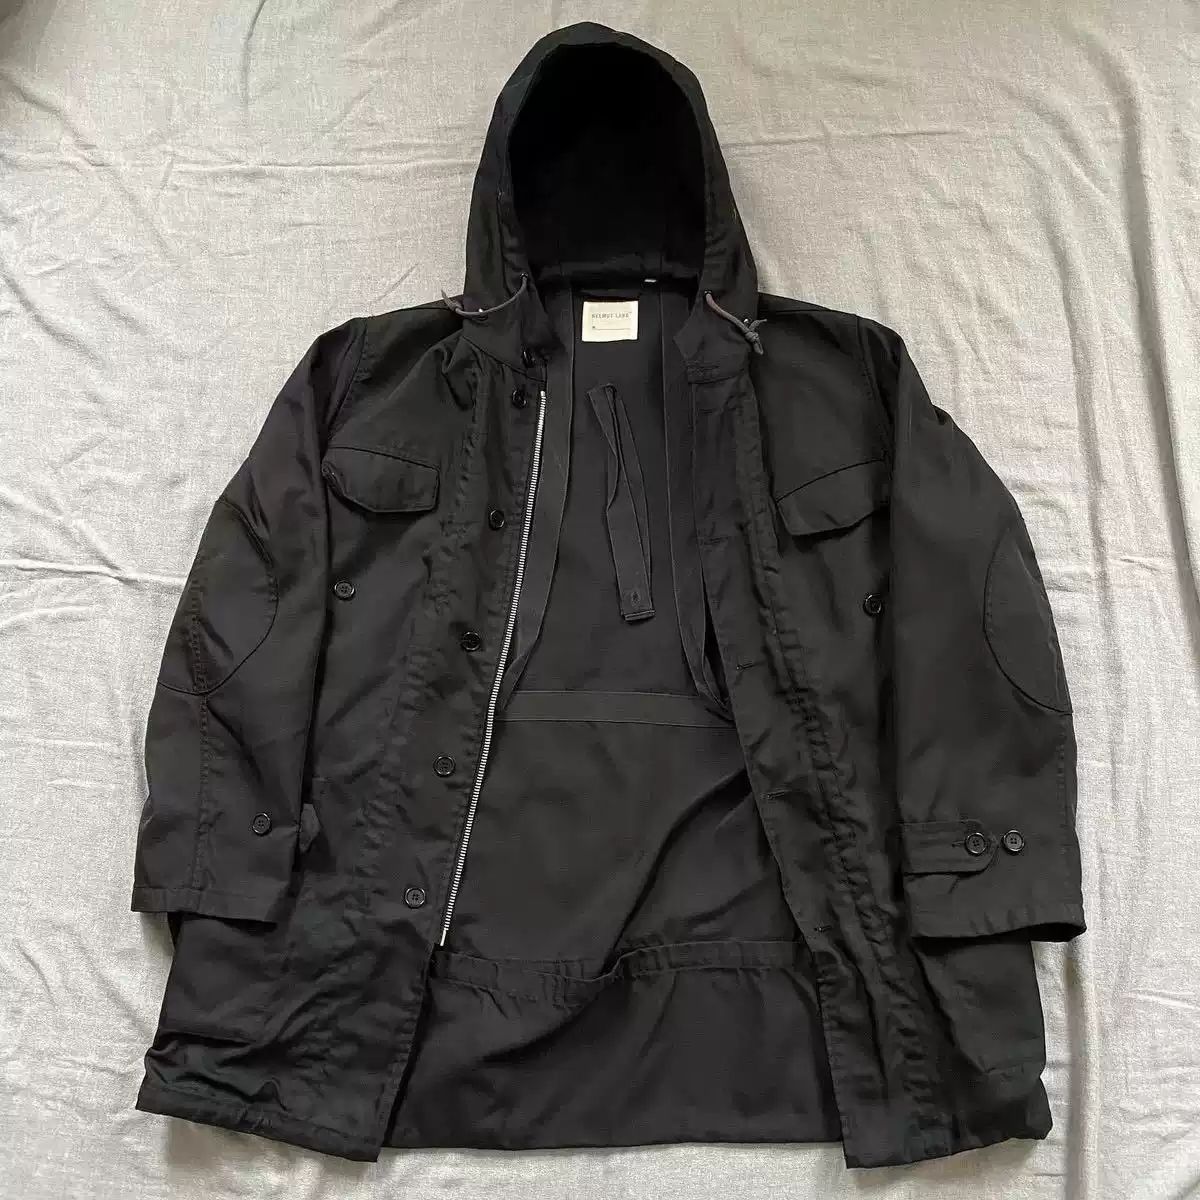 Helmut Lang Helmut Lang 1998 overcoat trench coat Mmur65 jacket archive vintage collection Size US M / EU 48-50 / 2 - 2 Preview